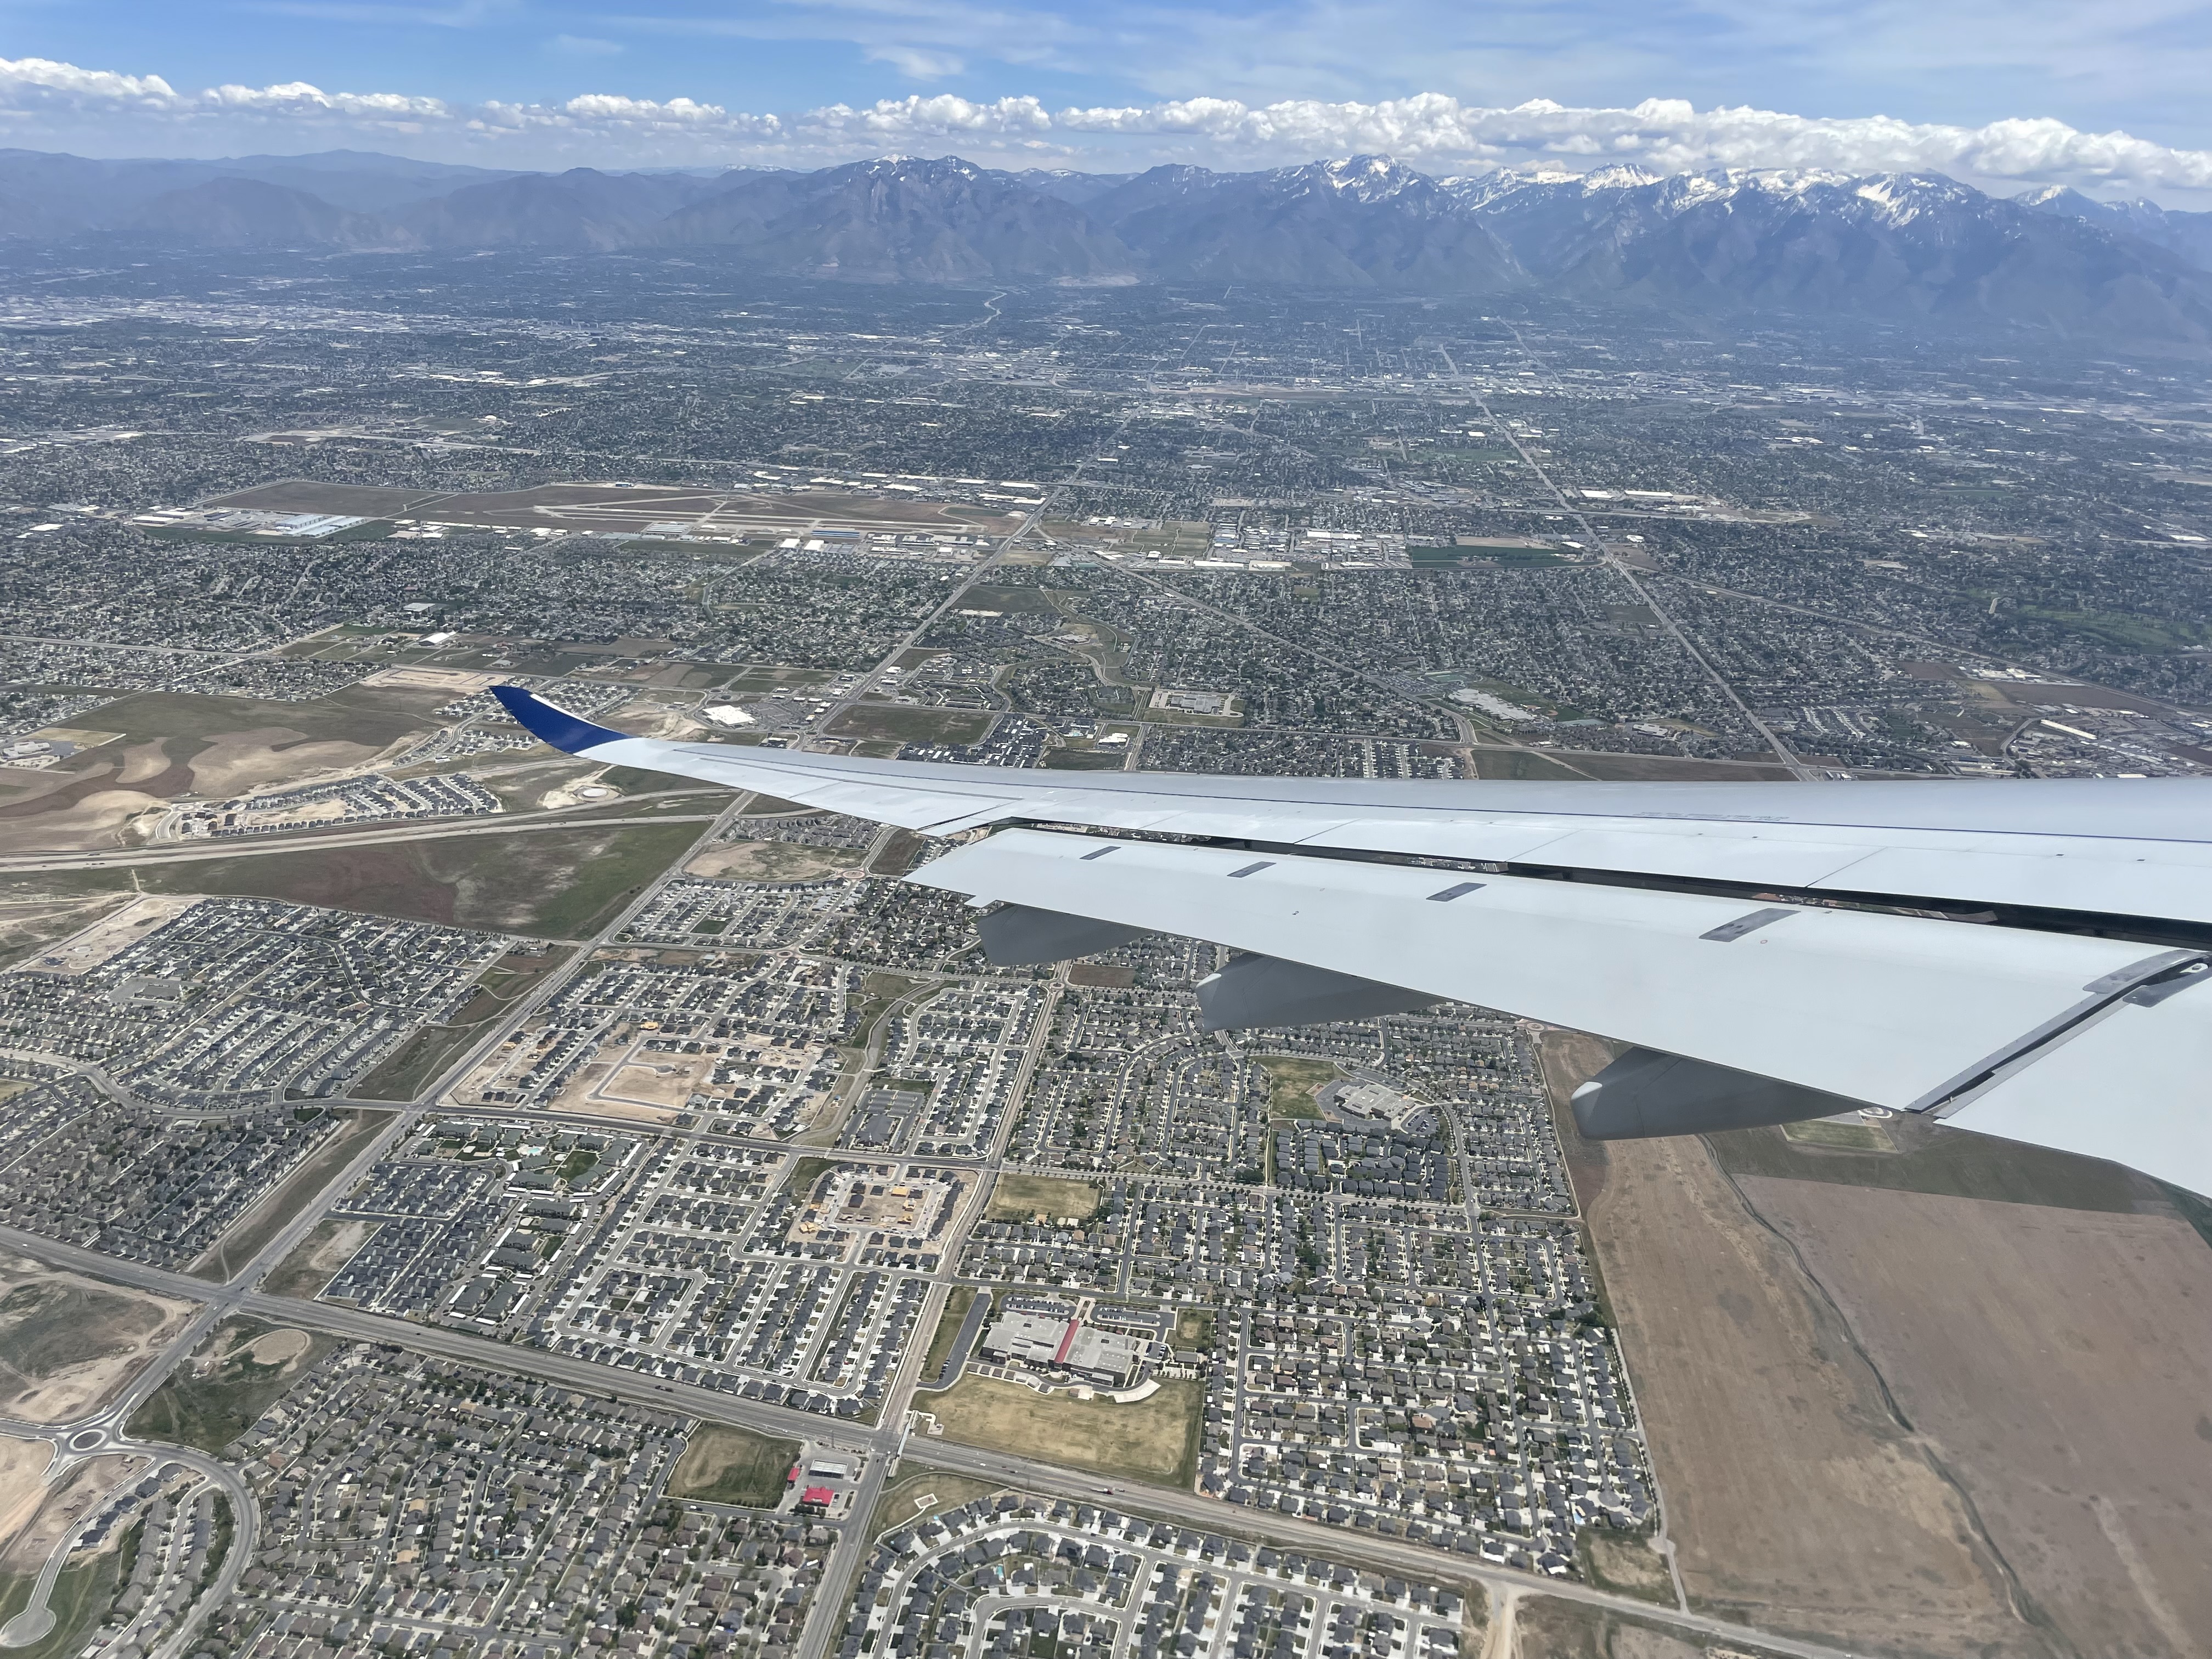 Flying into Salt Lake City